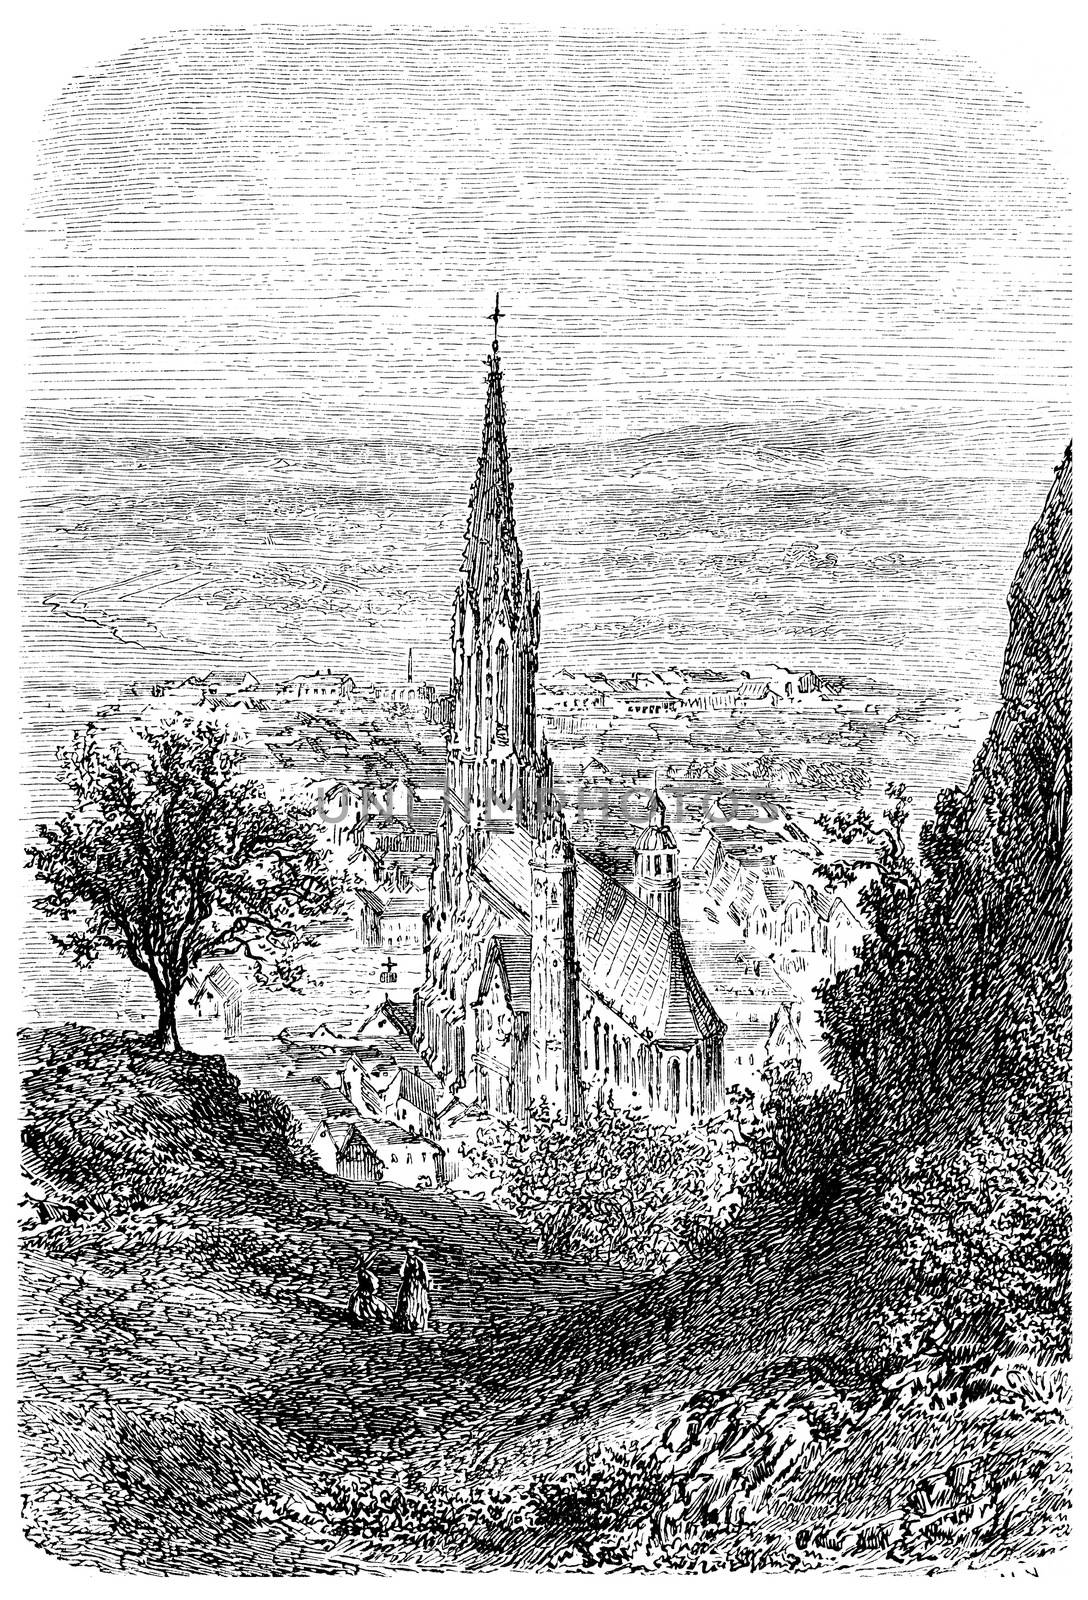 Freiburg in Breisgau, vintage engraving. by Morphart